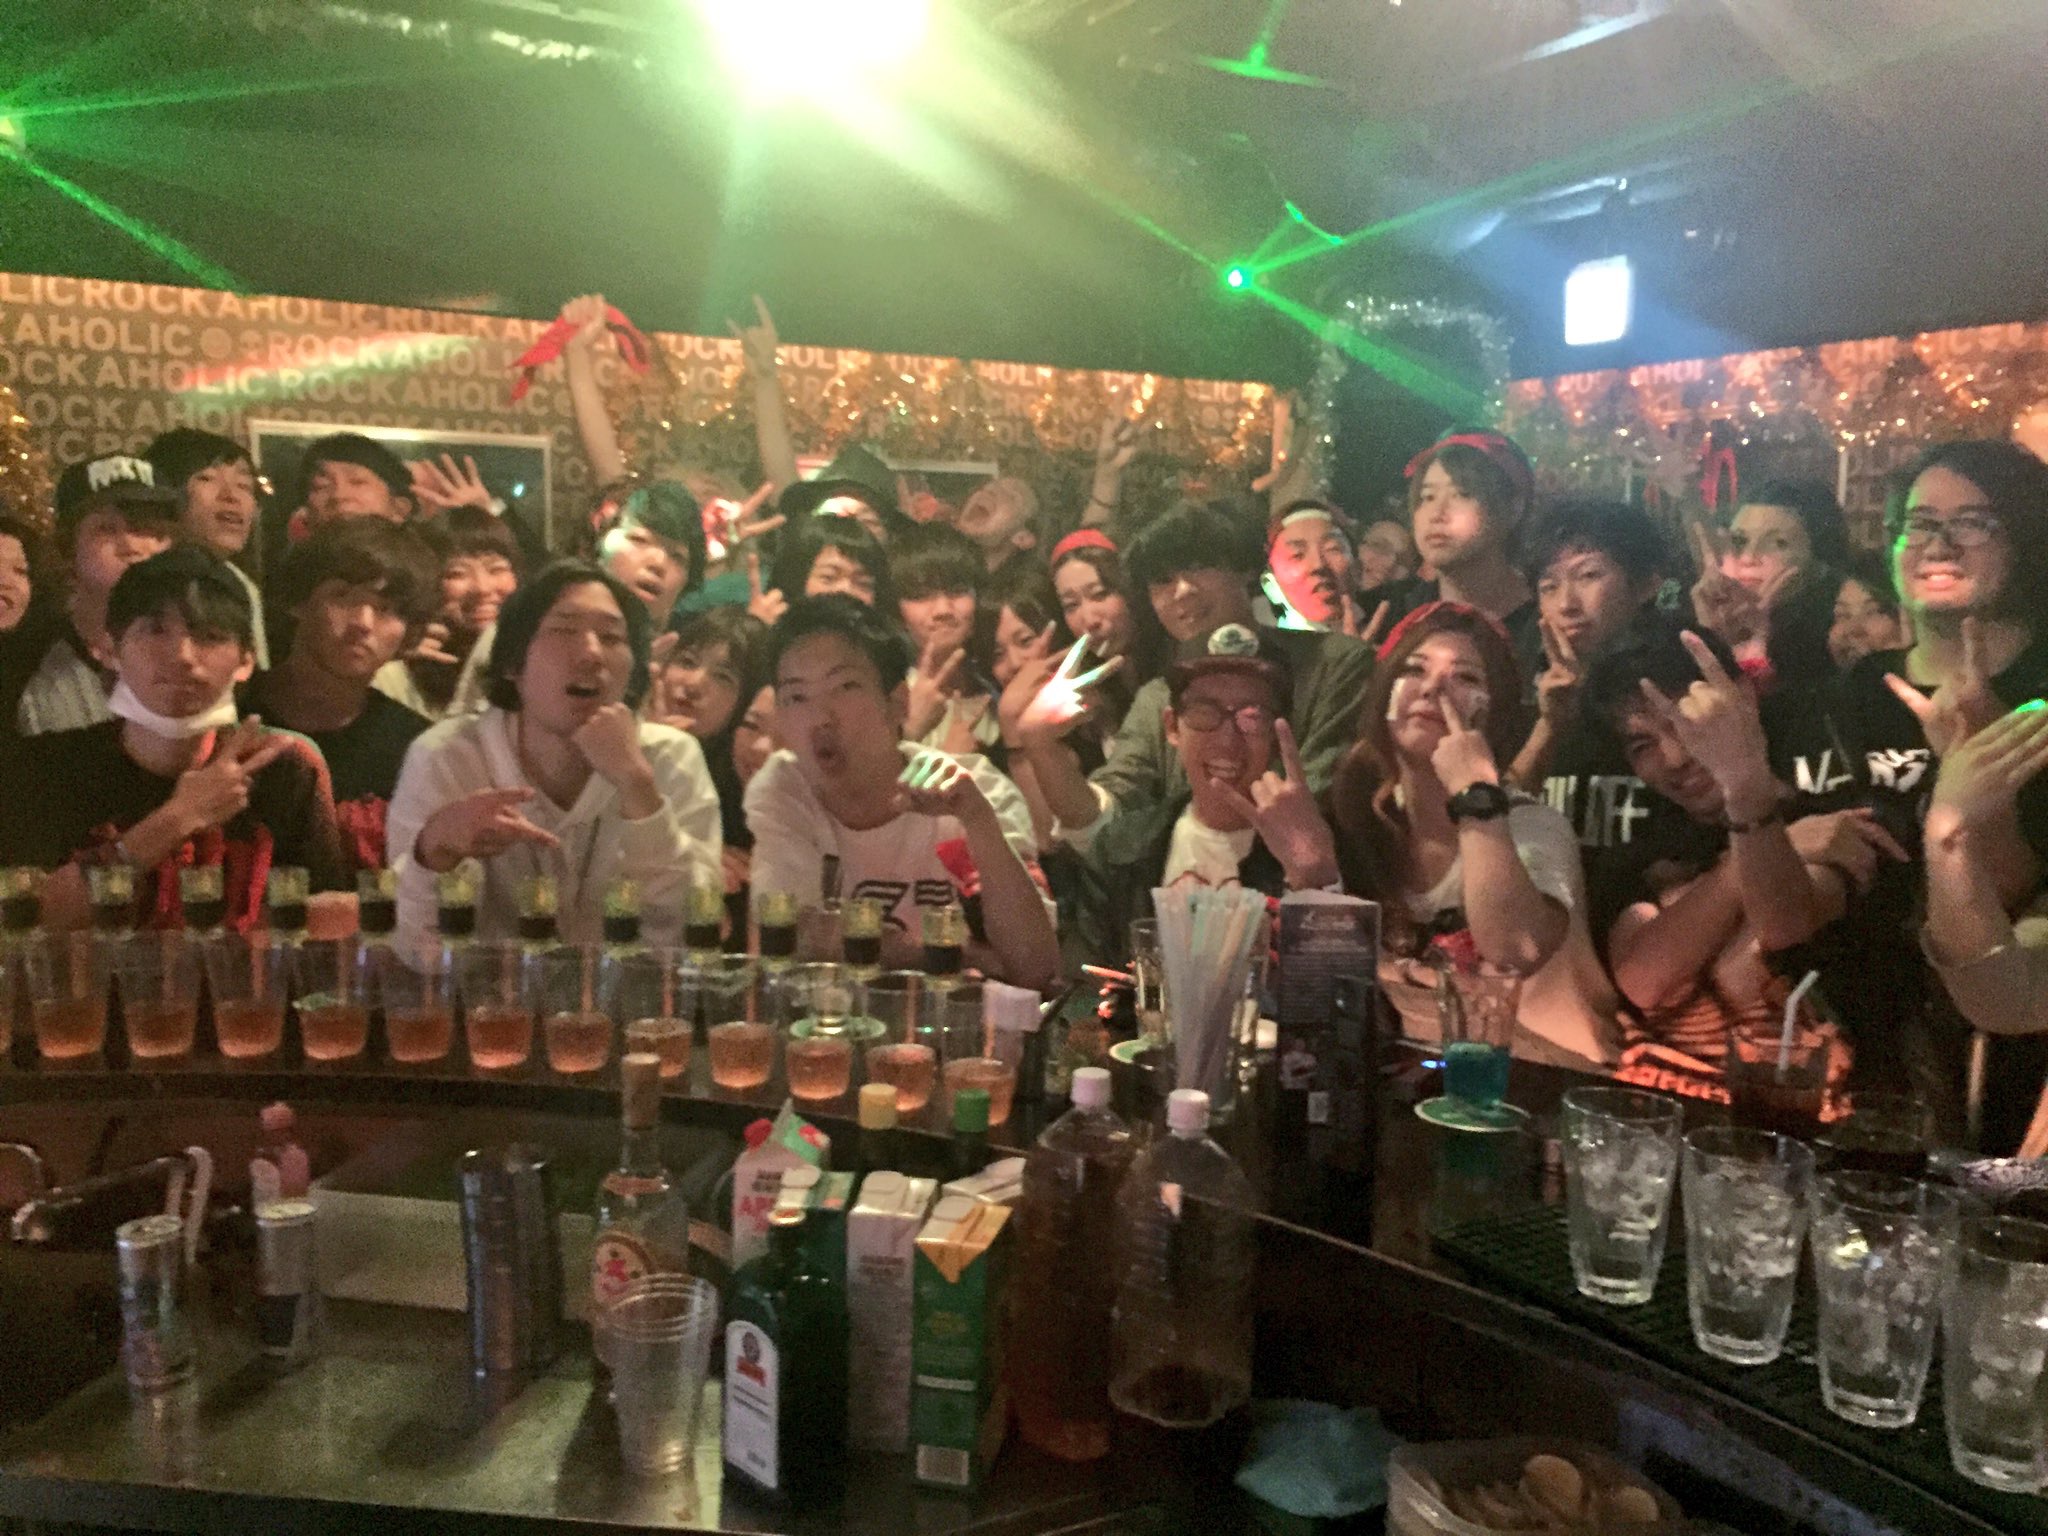 https://bar-rockaholic.jp/shibuya/blog/A2EA3F8E-2D48-4898-9426-859370C9119D.jpeg